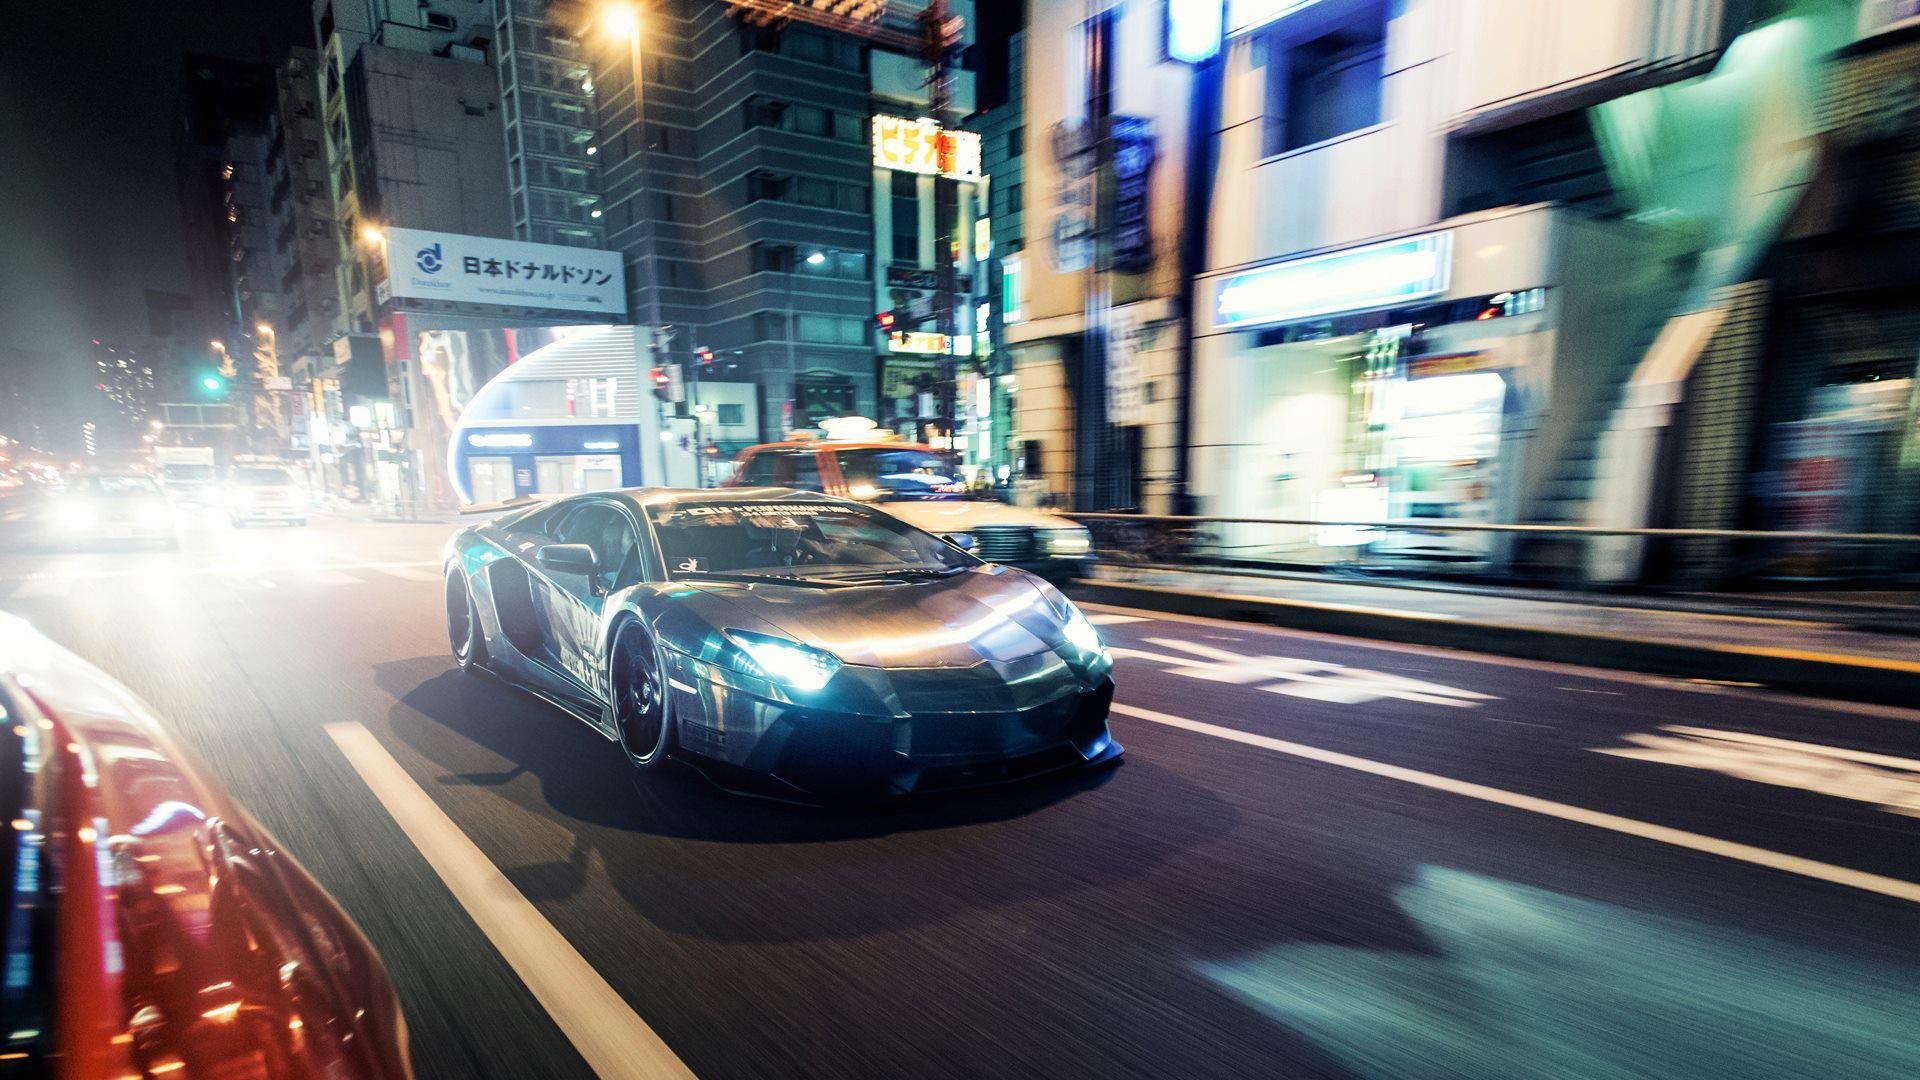 Driving Luxury Lamborghini Aventador City Streets Night Lights